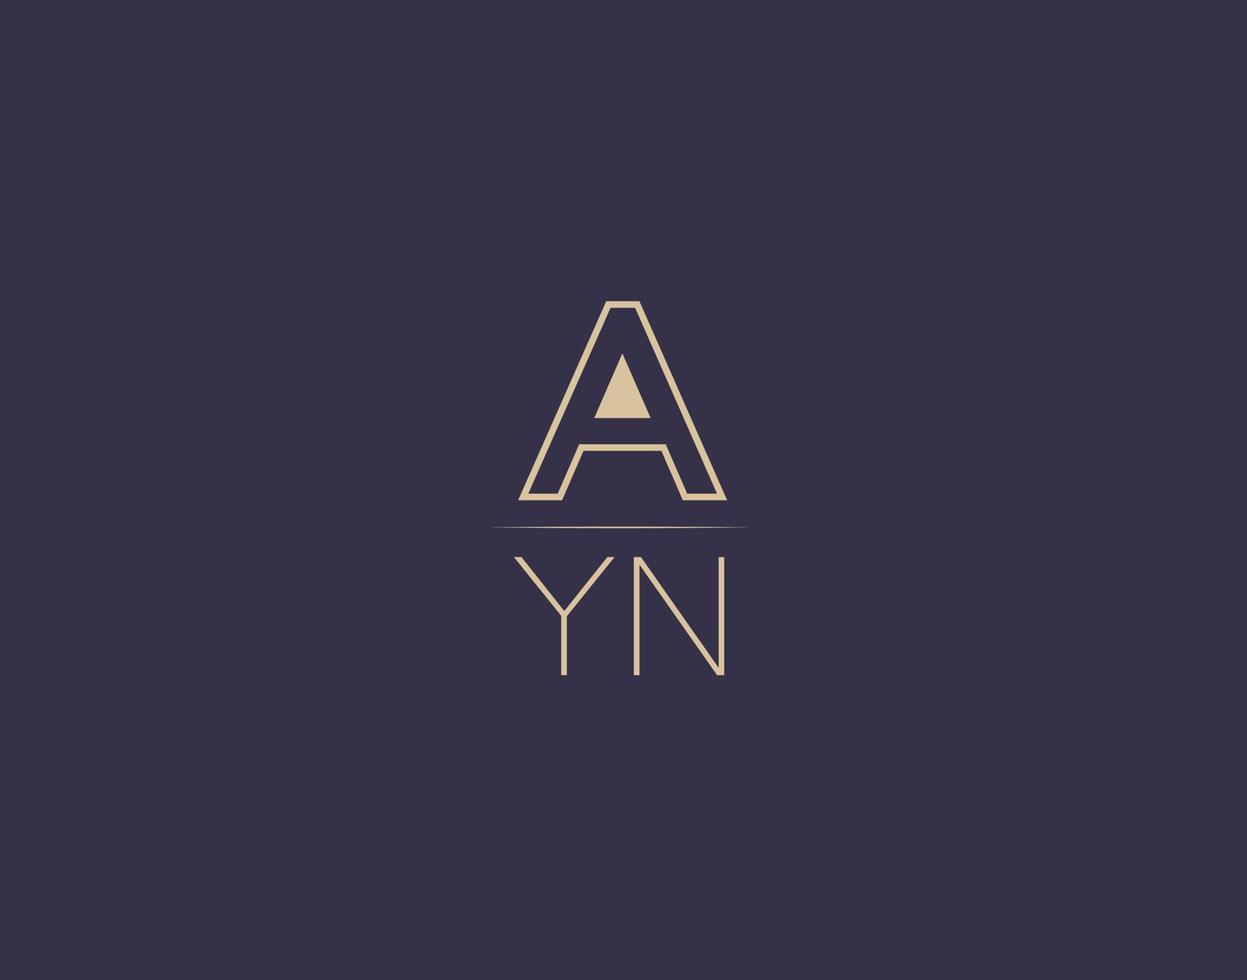 AYN letter logo design modern minimalist vector images